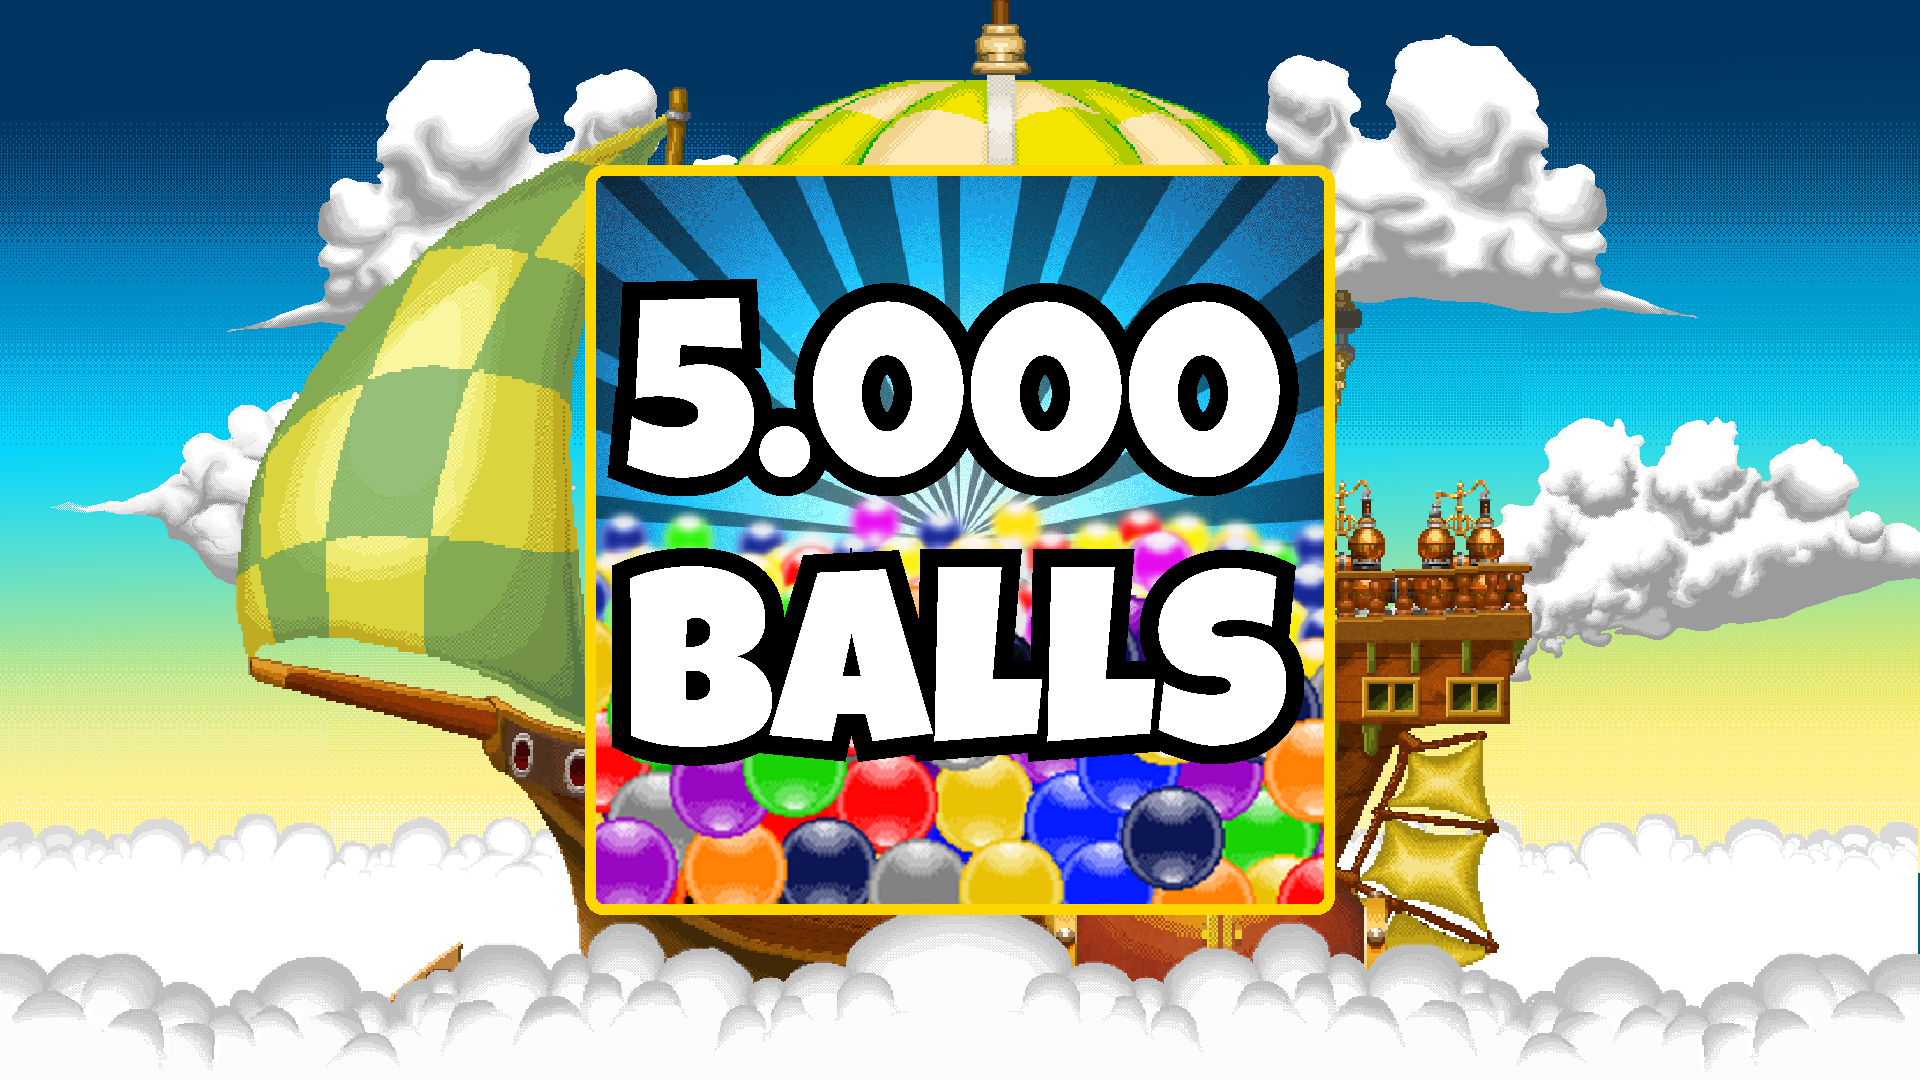 Icon for 5000 Balls